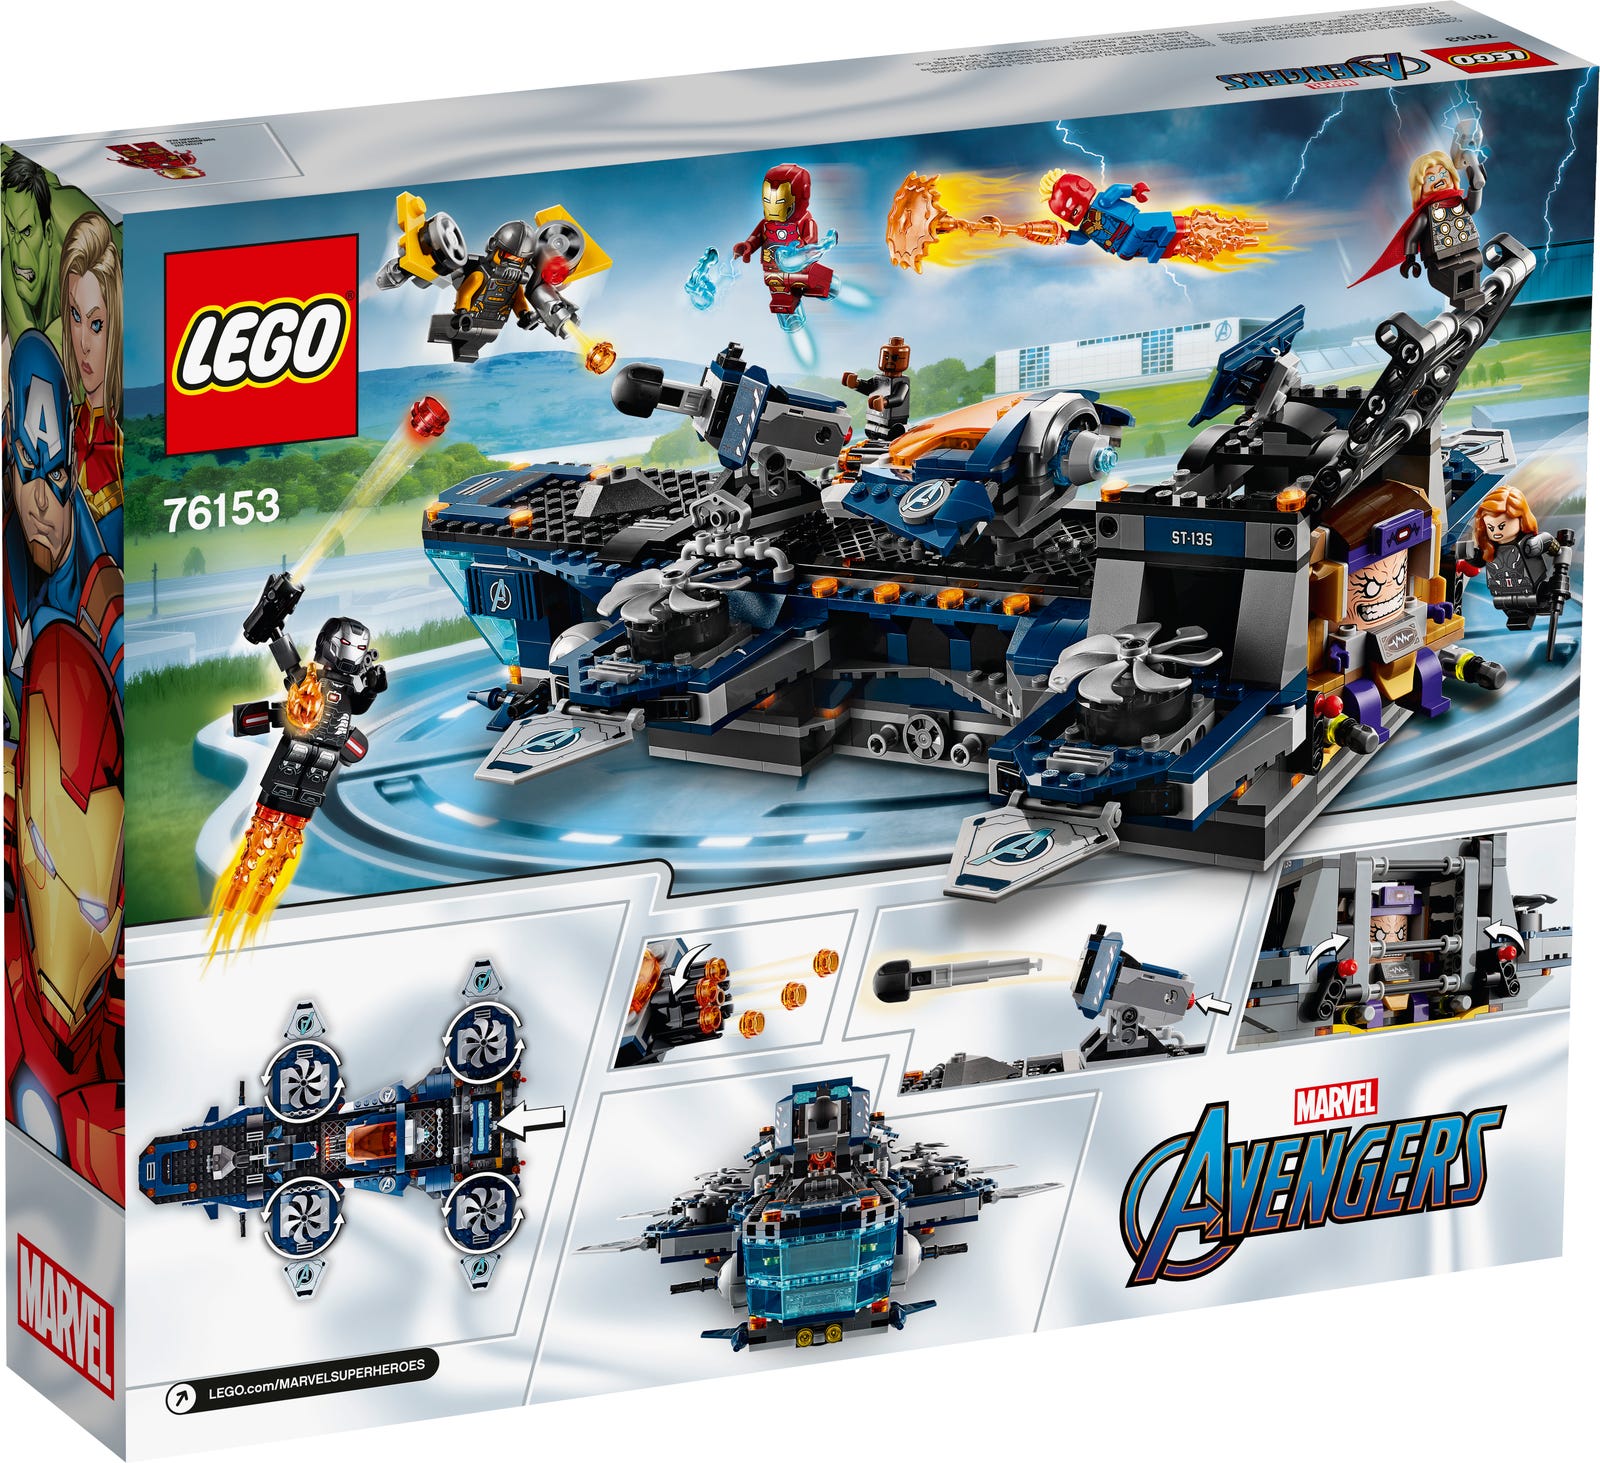 New Lego Super Heroes STICKER SHEET ONLY for set 76153 Avengers Helicarrier 